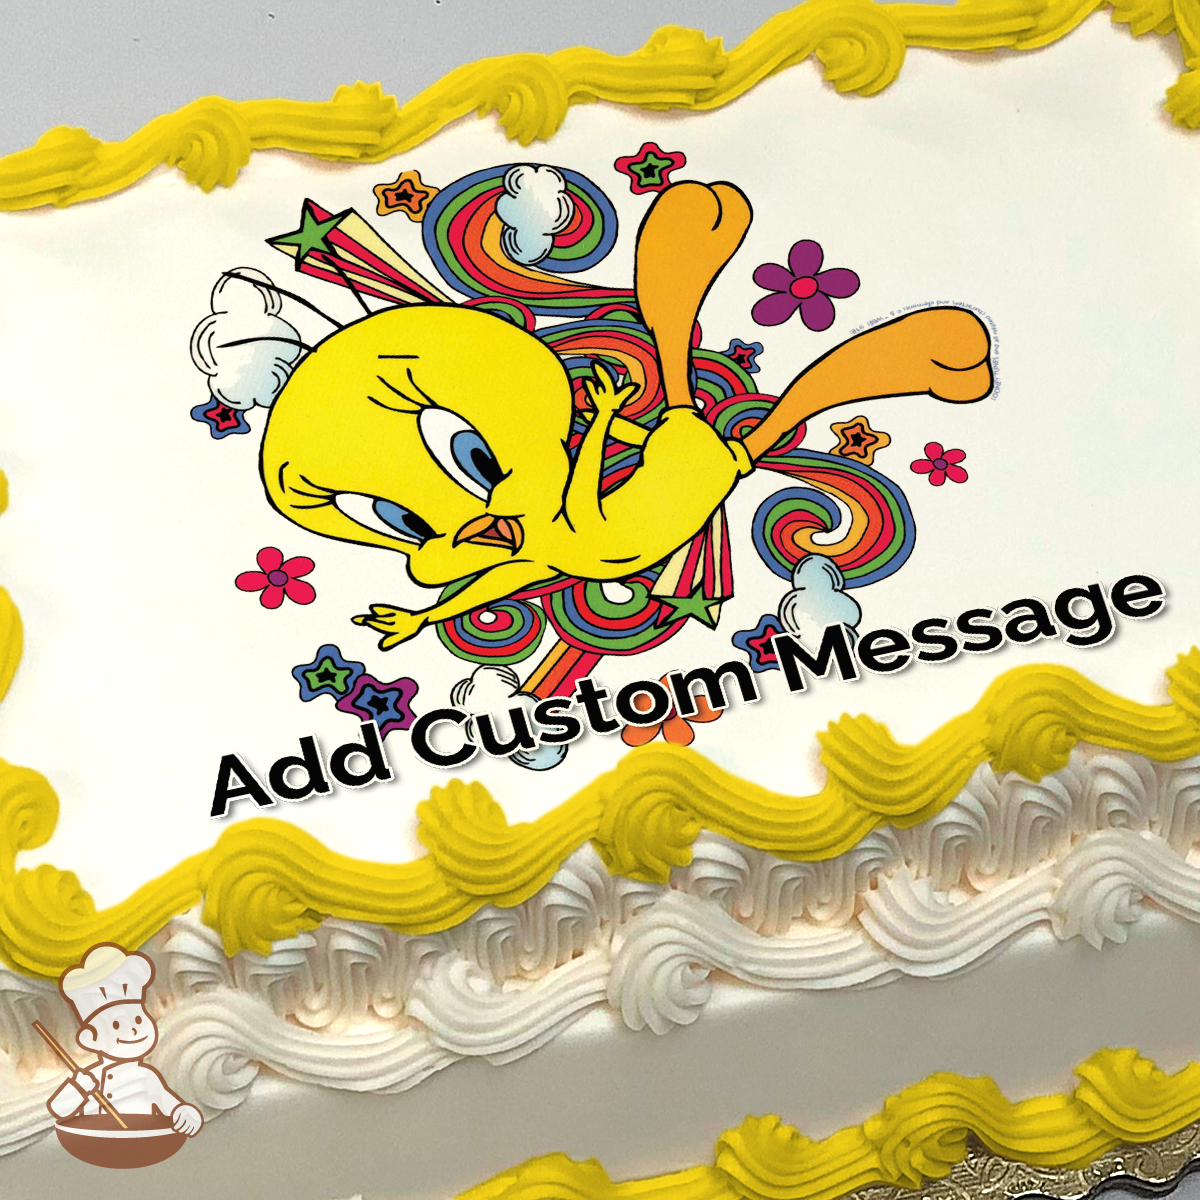 Write Name on Cute Tweety Bird Photo Birthday Cake